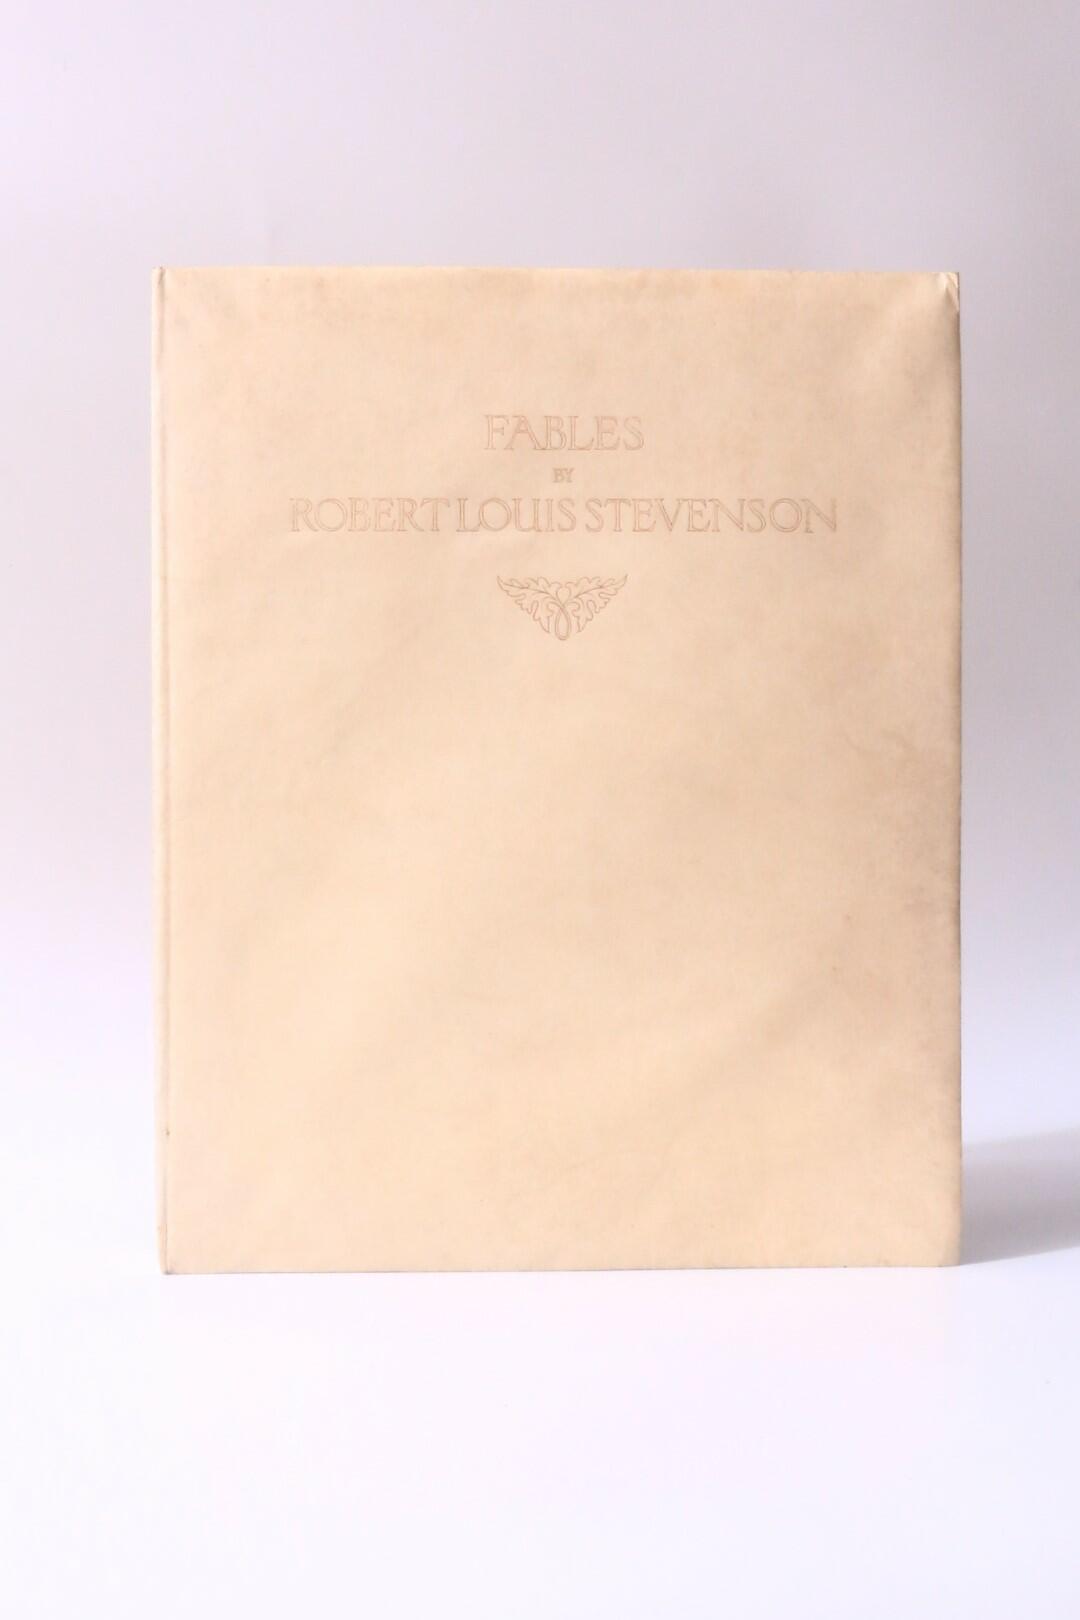 Robert Louis Stevenson - Fables - Longmans, Green & Co., 1914, Limited Edition.